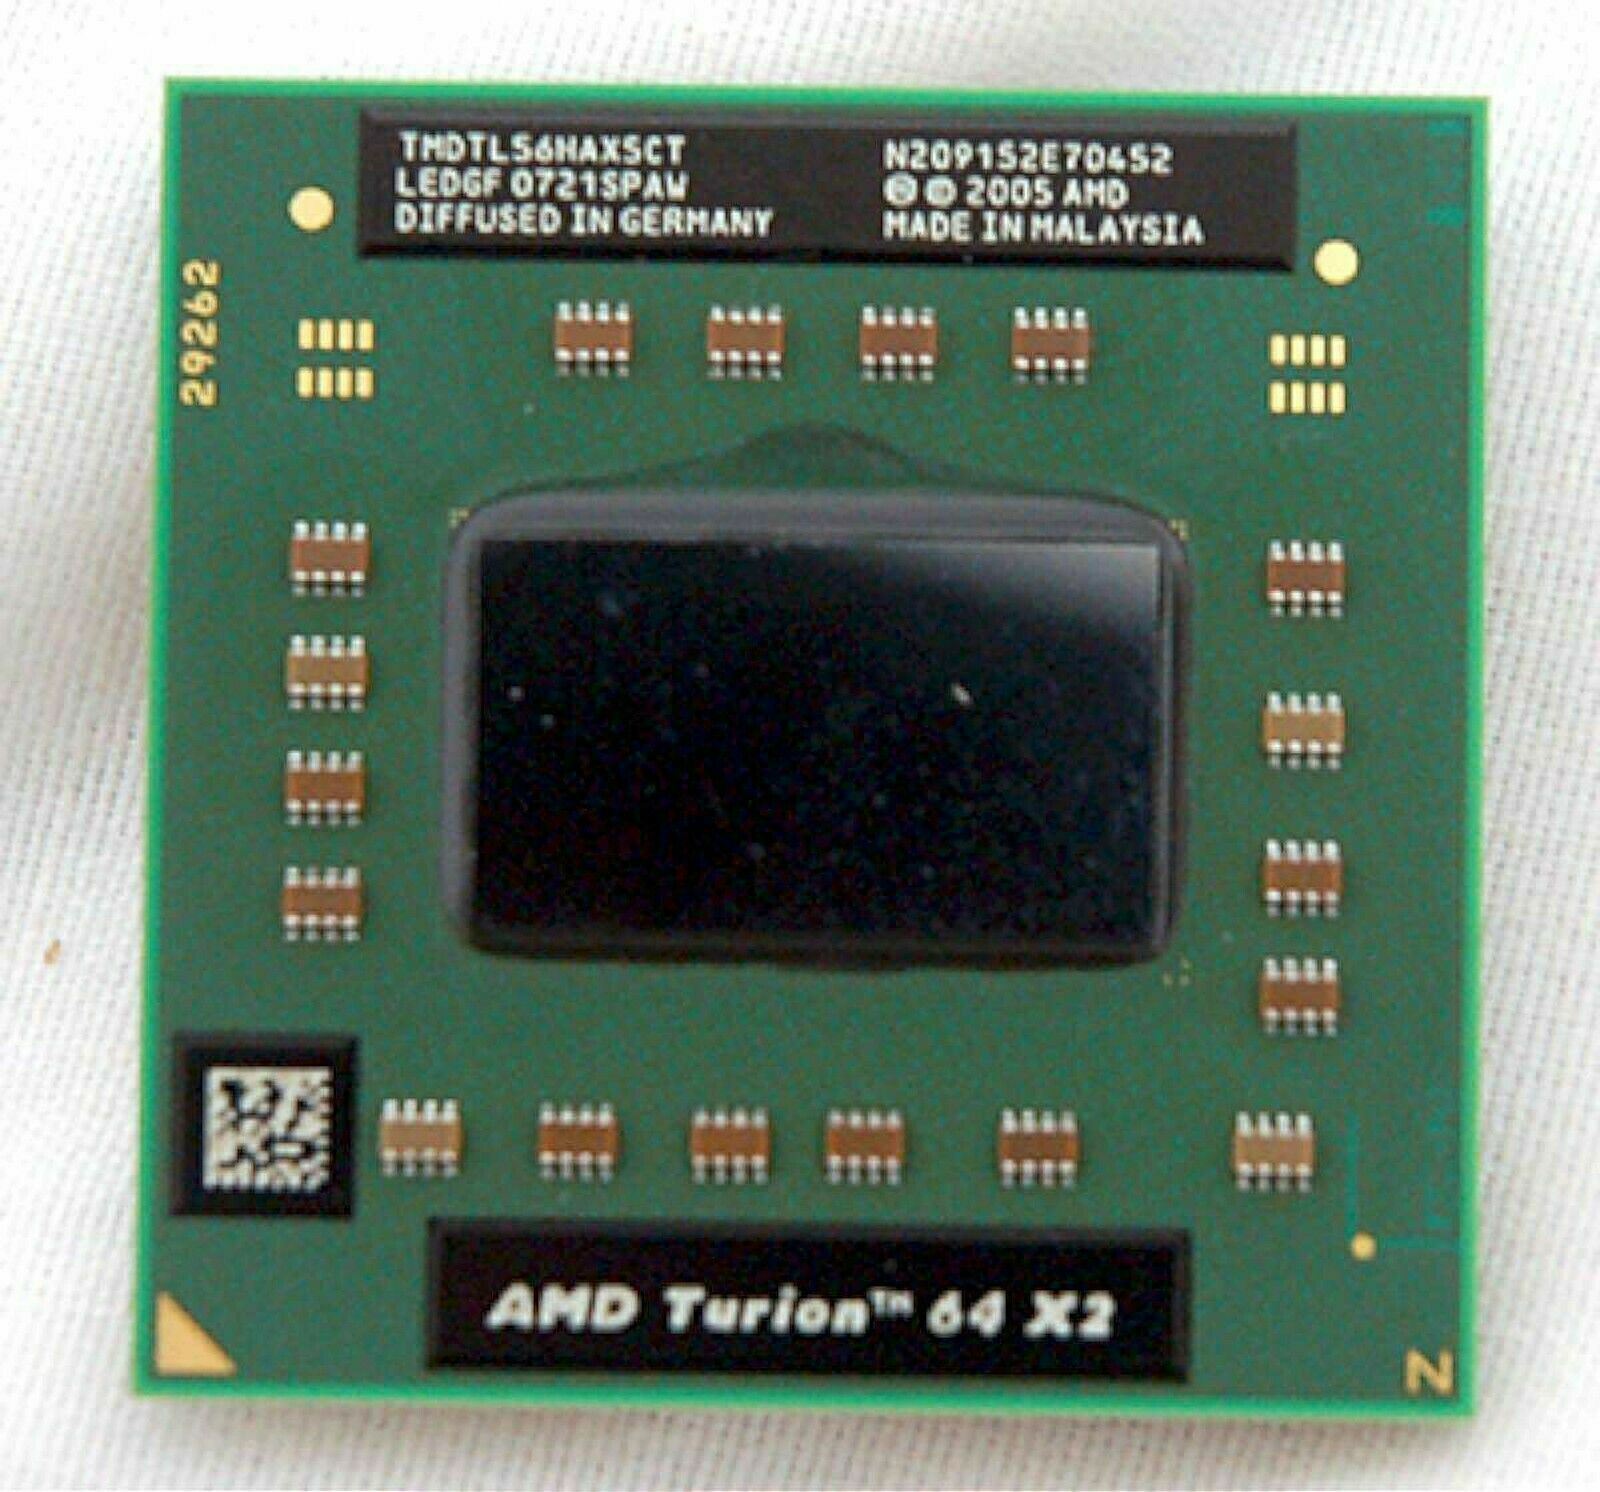 AMD Turion-64 X2 TL-56 1.8-Ghz CPU TMDTL56HAX5CT Mobile Microprocessor